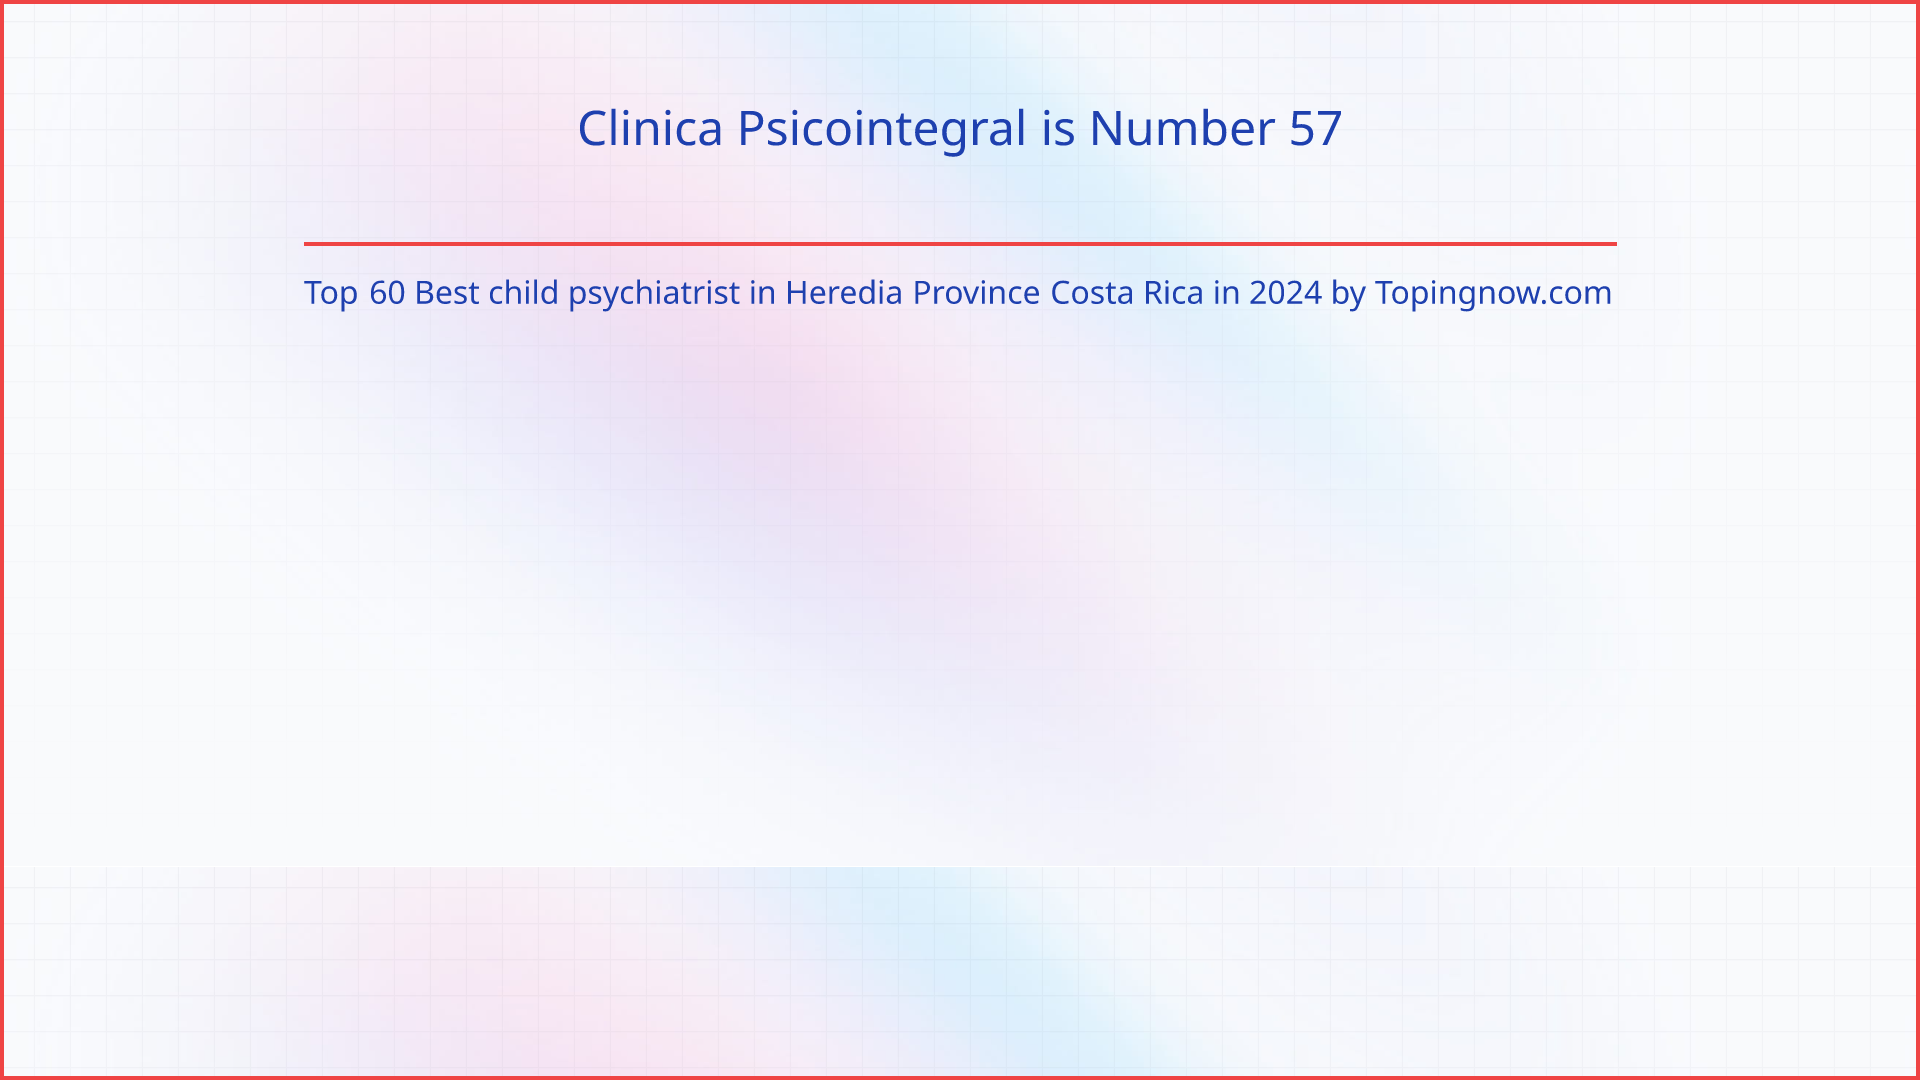 Clinica Psicointegral: Top 60 Best child psychiatrist in Heredia Province Costa Rica in 2024